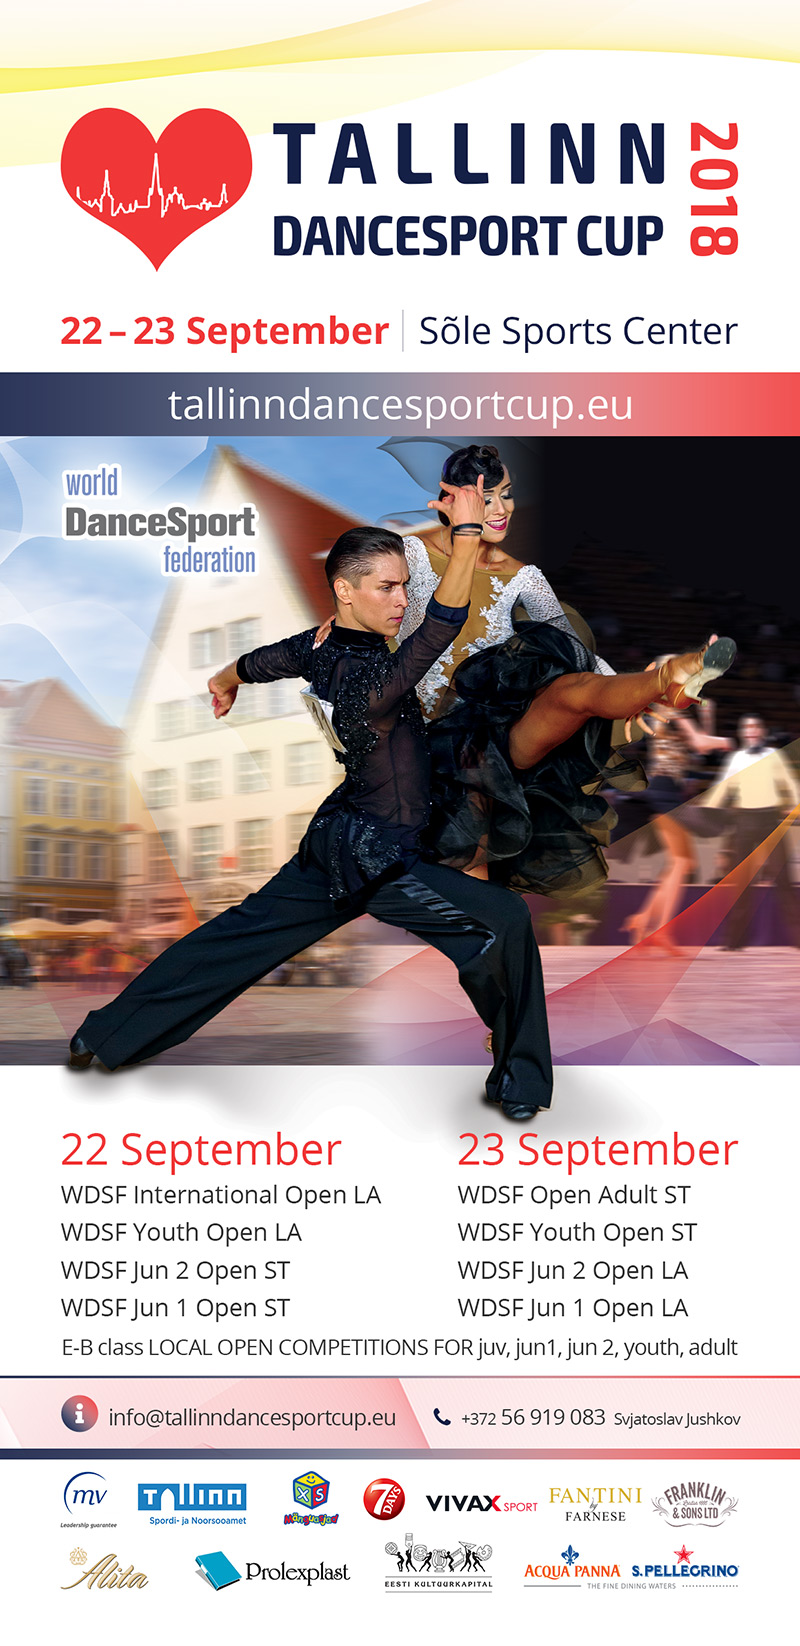 Tallinn Dance Sport Cup 2018, 22 – 23 September in Sõle Sports Center